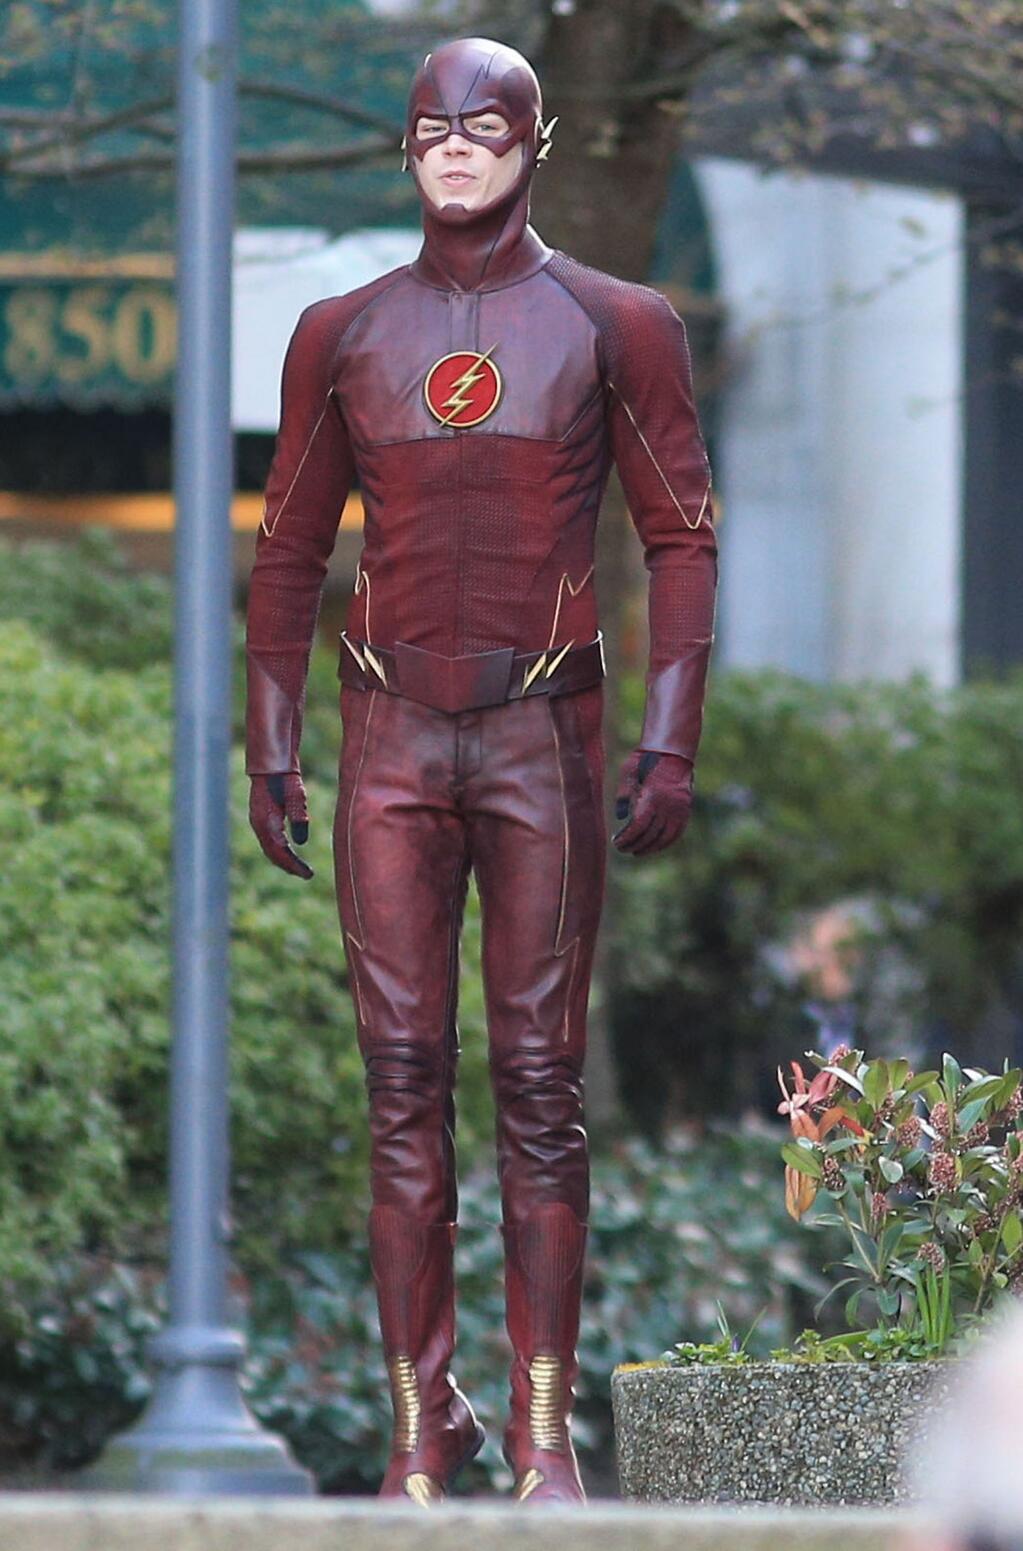 The Flash - Costume - The Flash (CW) Photo (36781387) - Fanpop